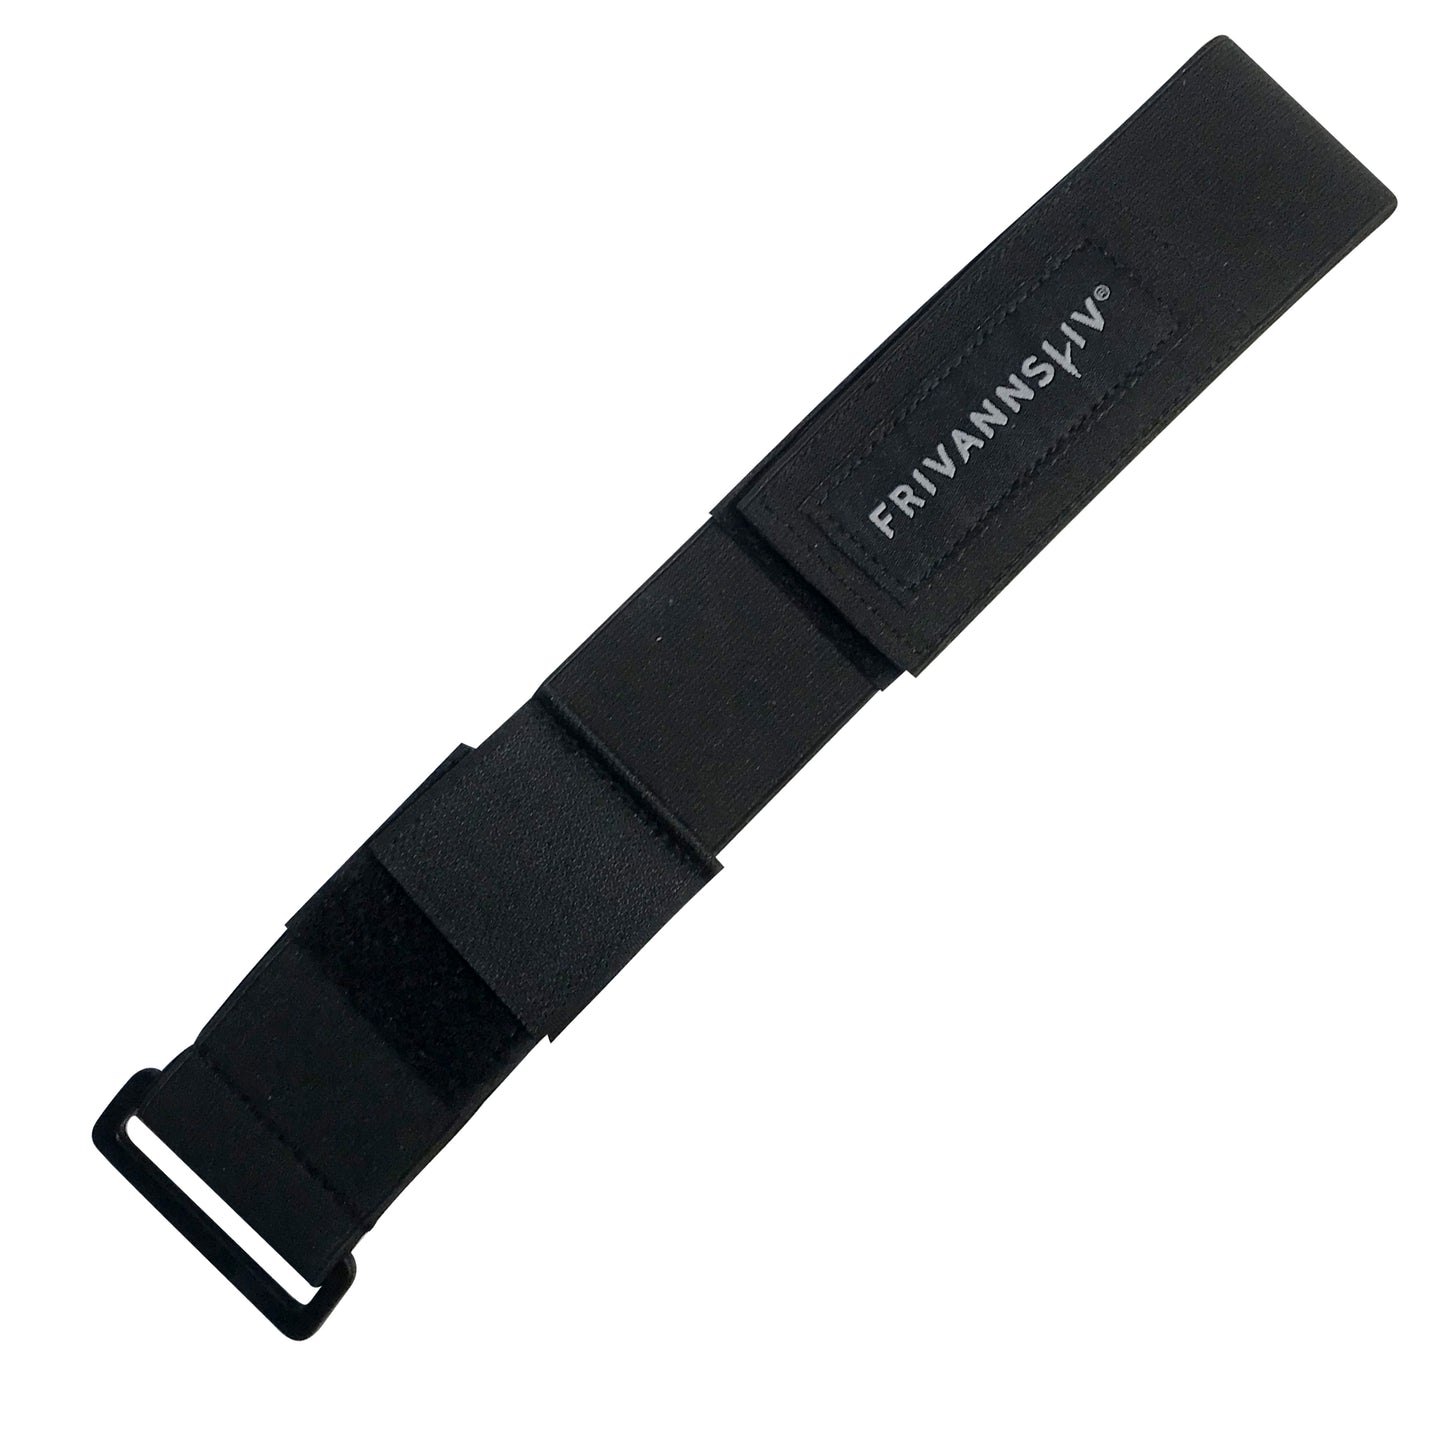 FRIVANNSLIV® knife strap with Velcro